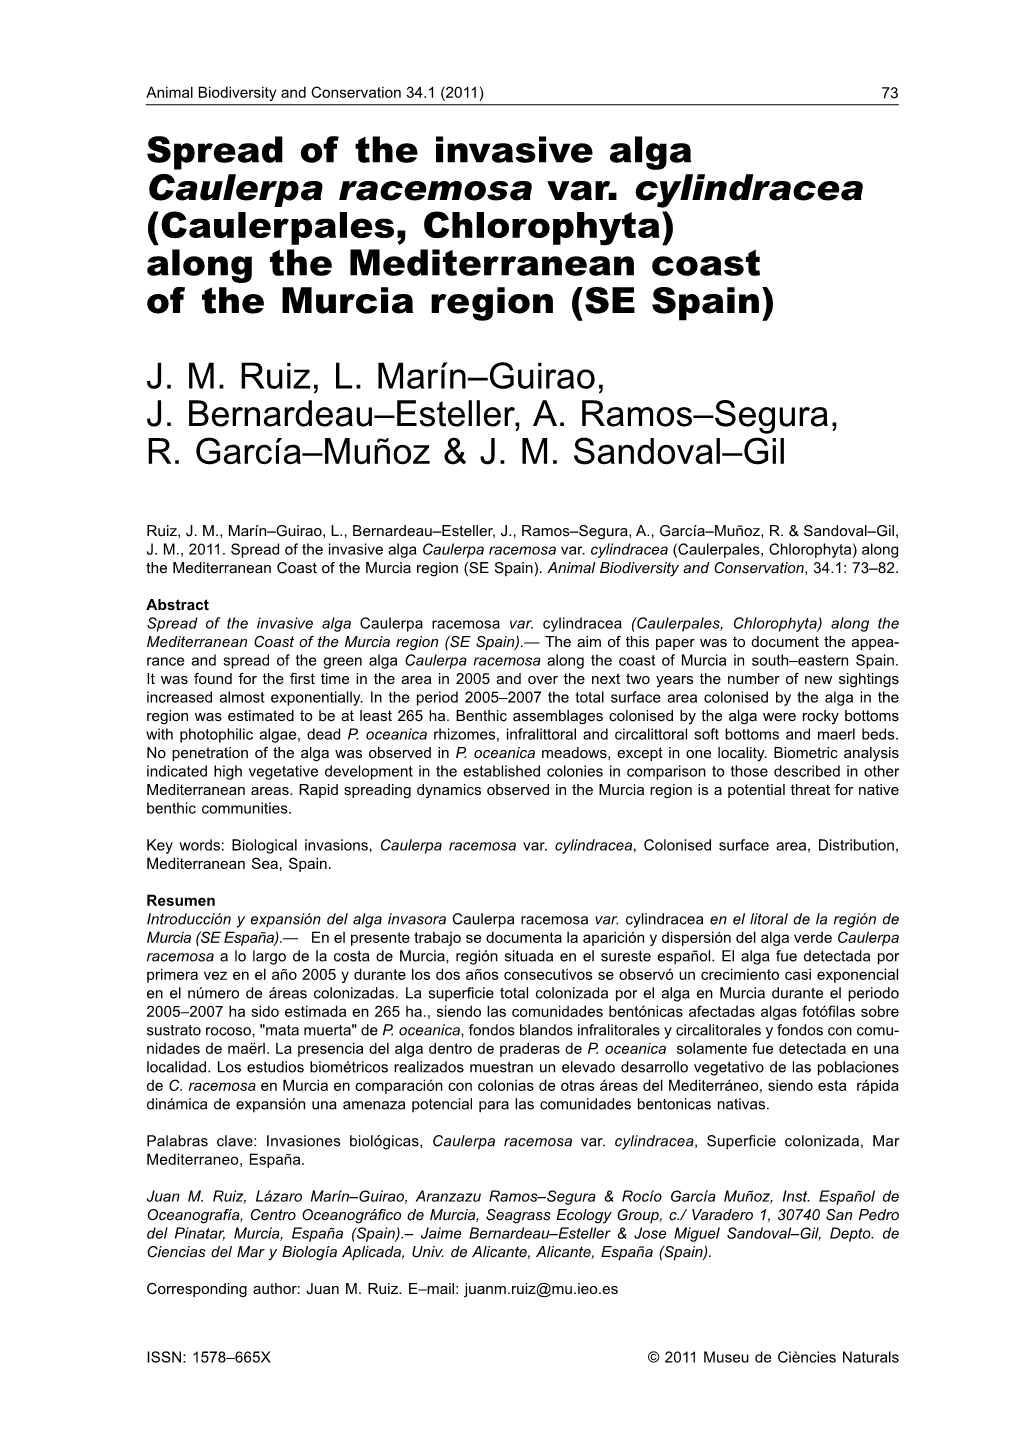 Spread of the Invasive Alga Caulerpa Racemosa Var. Cylindracea (Caulerpales, Chlorophyta) Along the Mediterranean Coast of the Murcia Region (SE Spain)